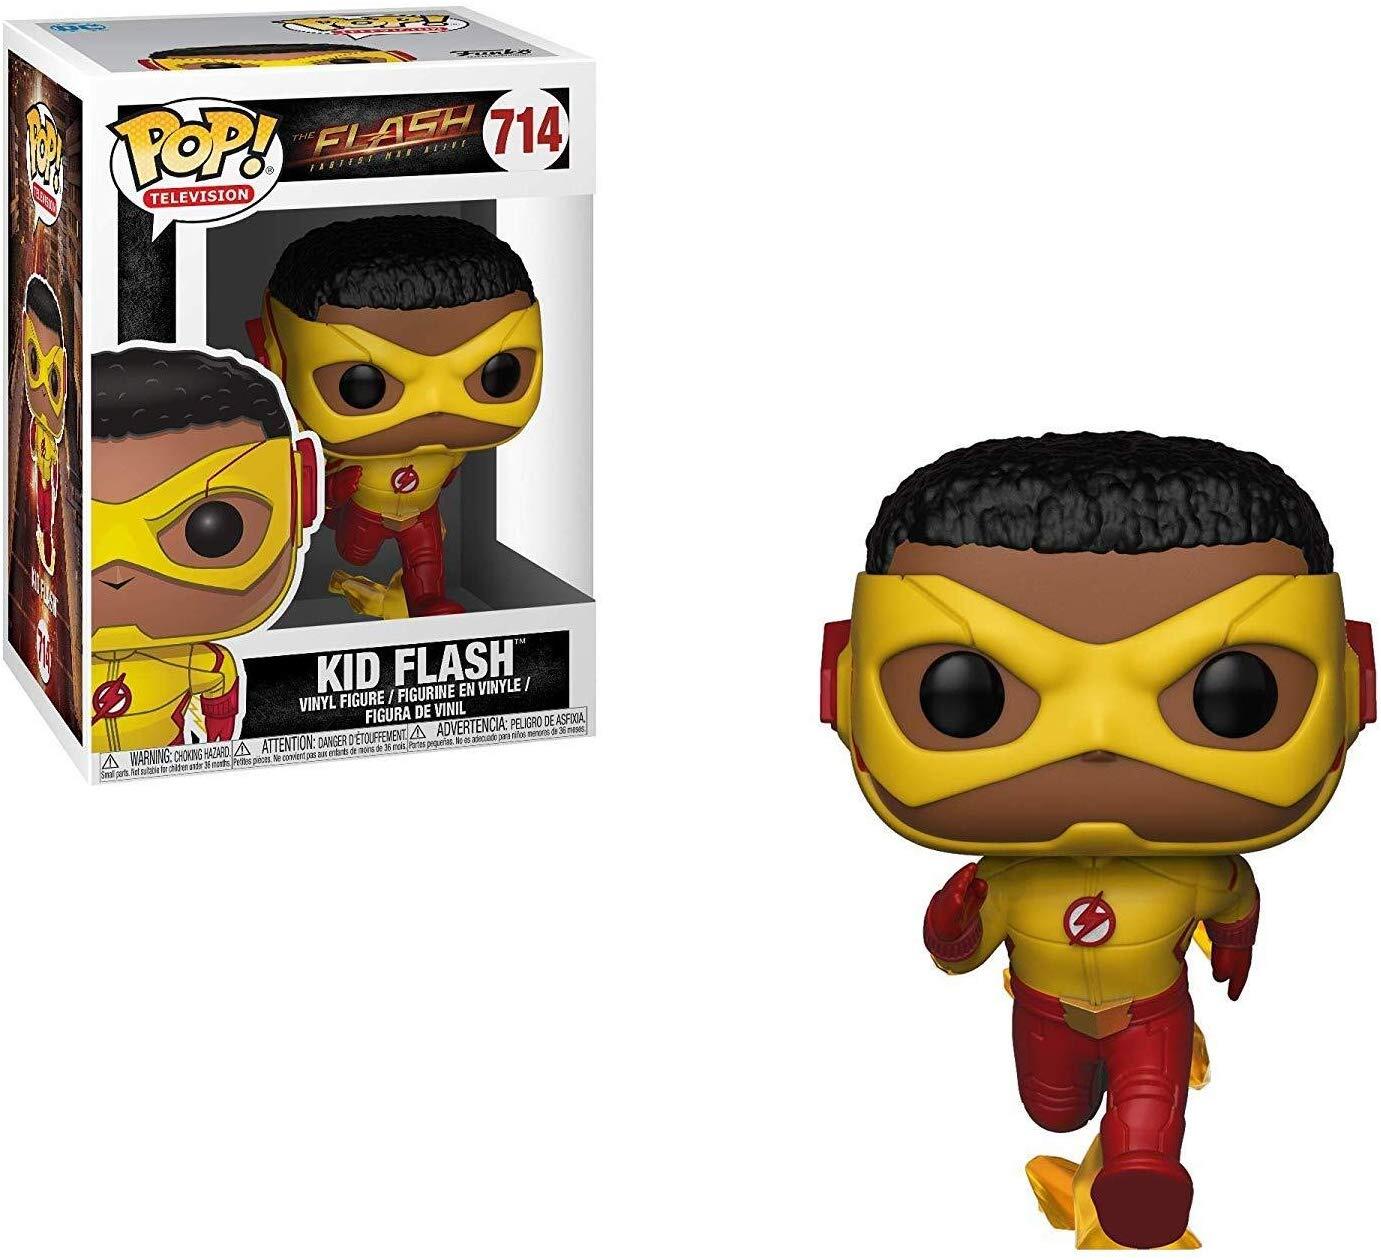 Pop! Television: The Flash - Kid Flash (714)